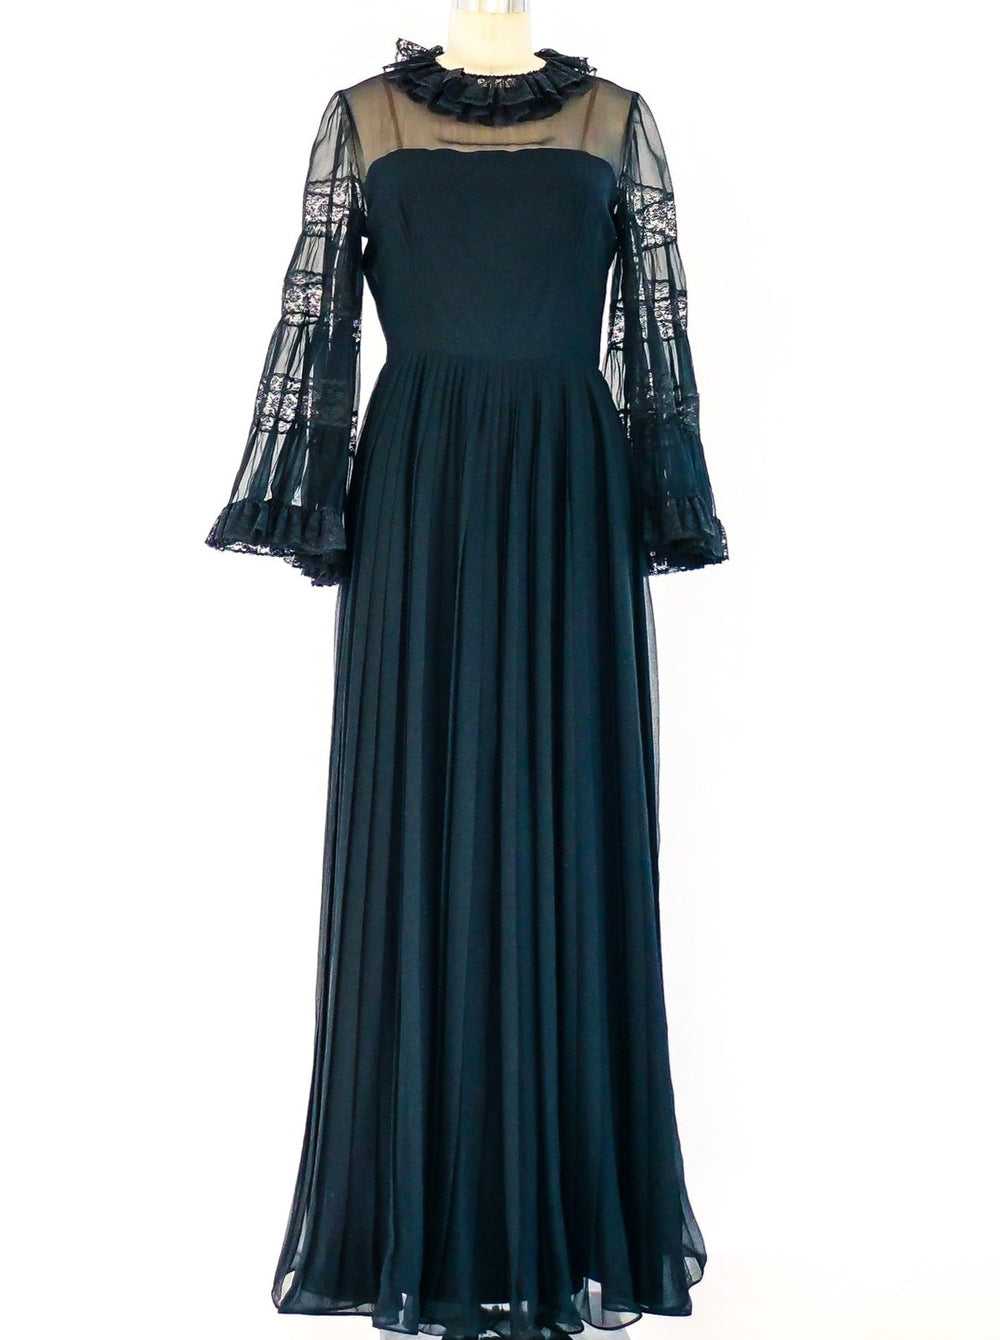 Elizabeth Arden Black Chiffon Gown - image 1